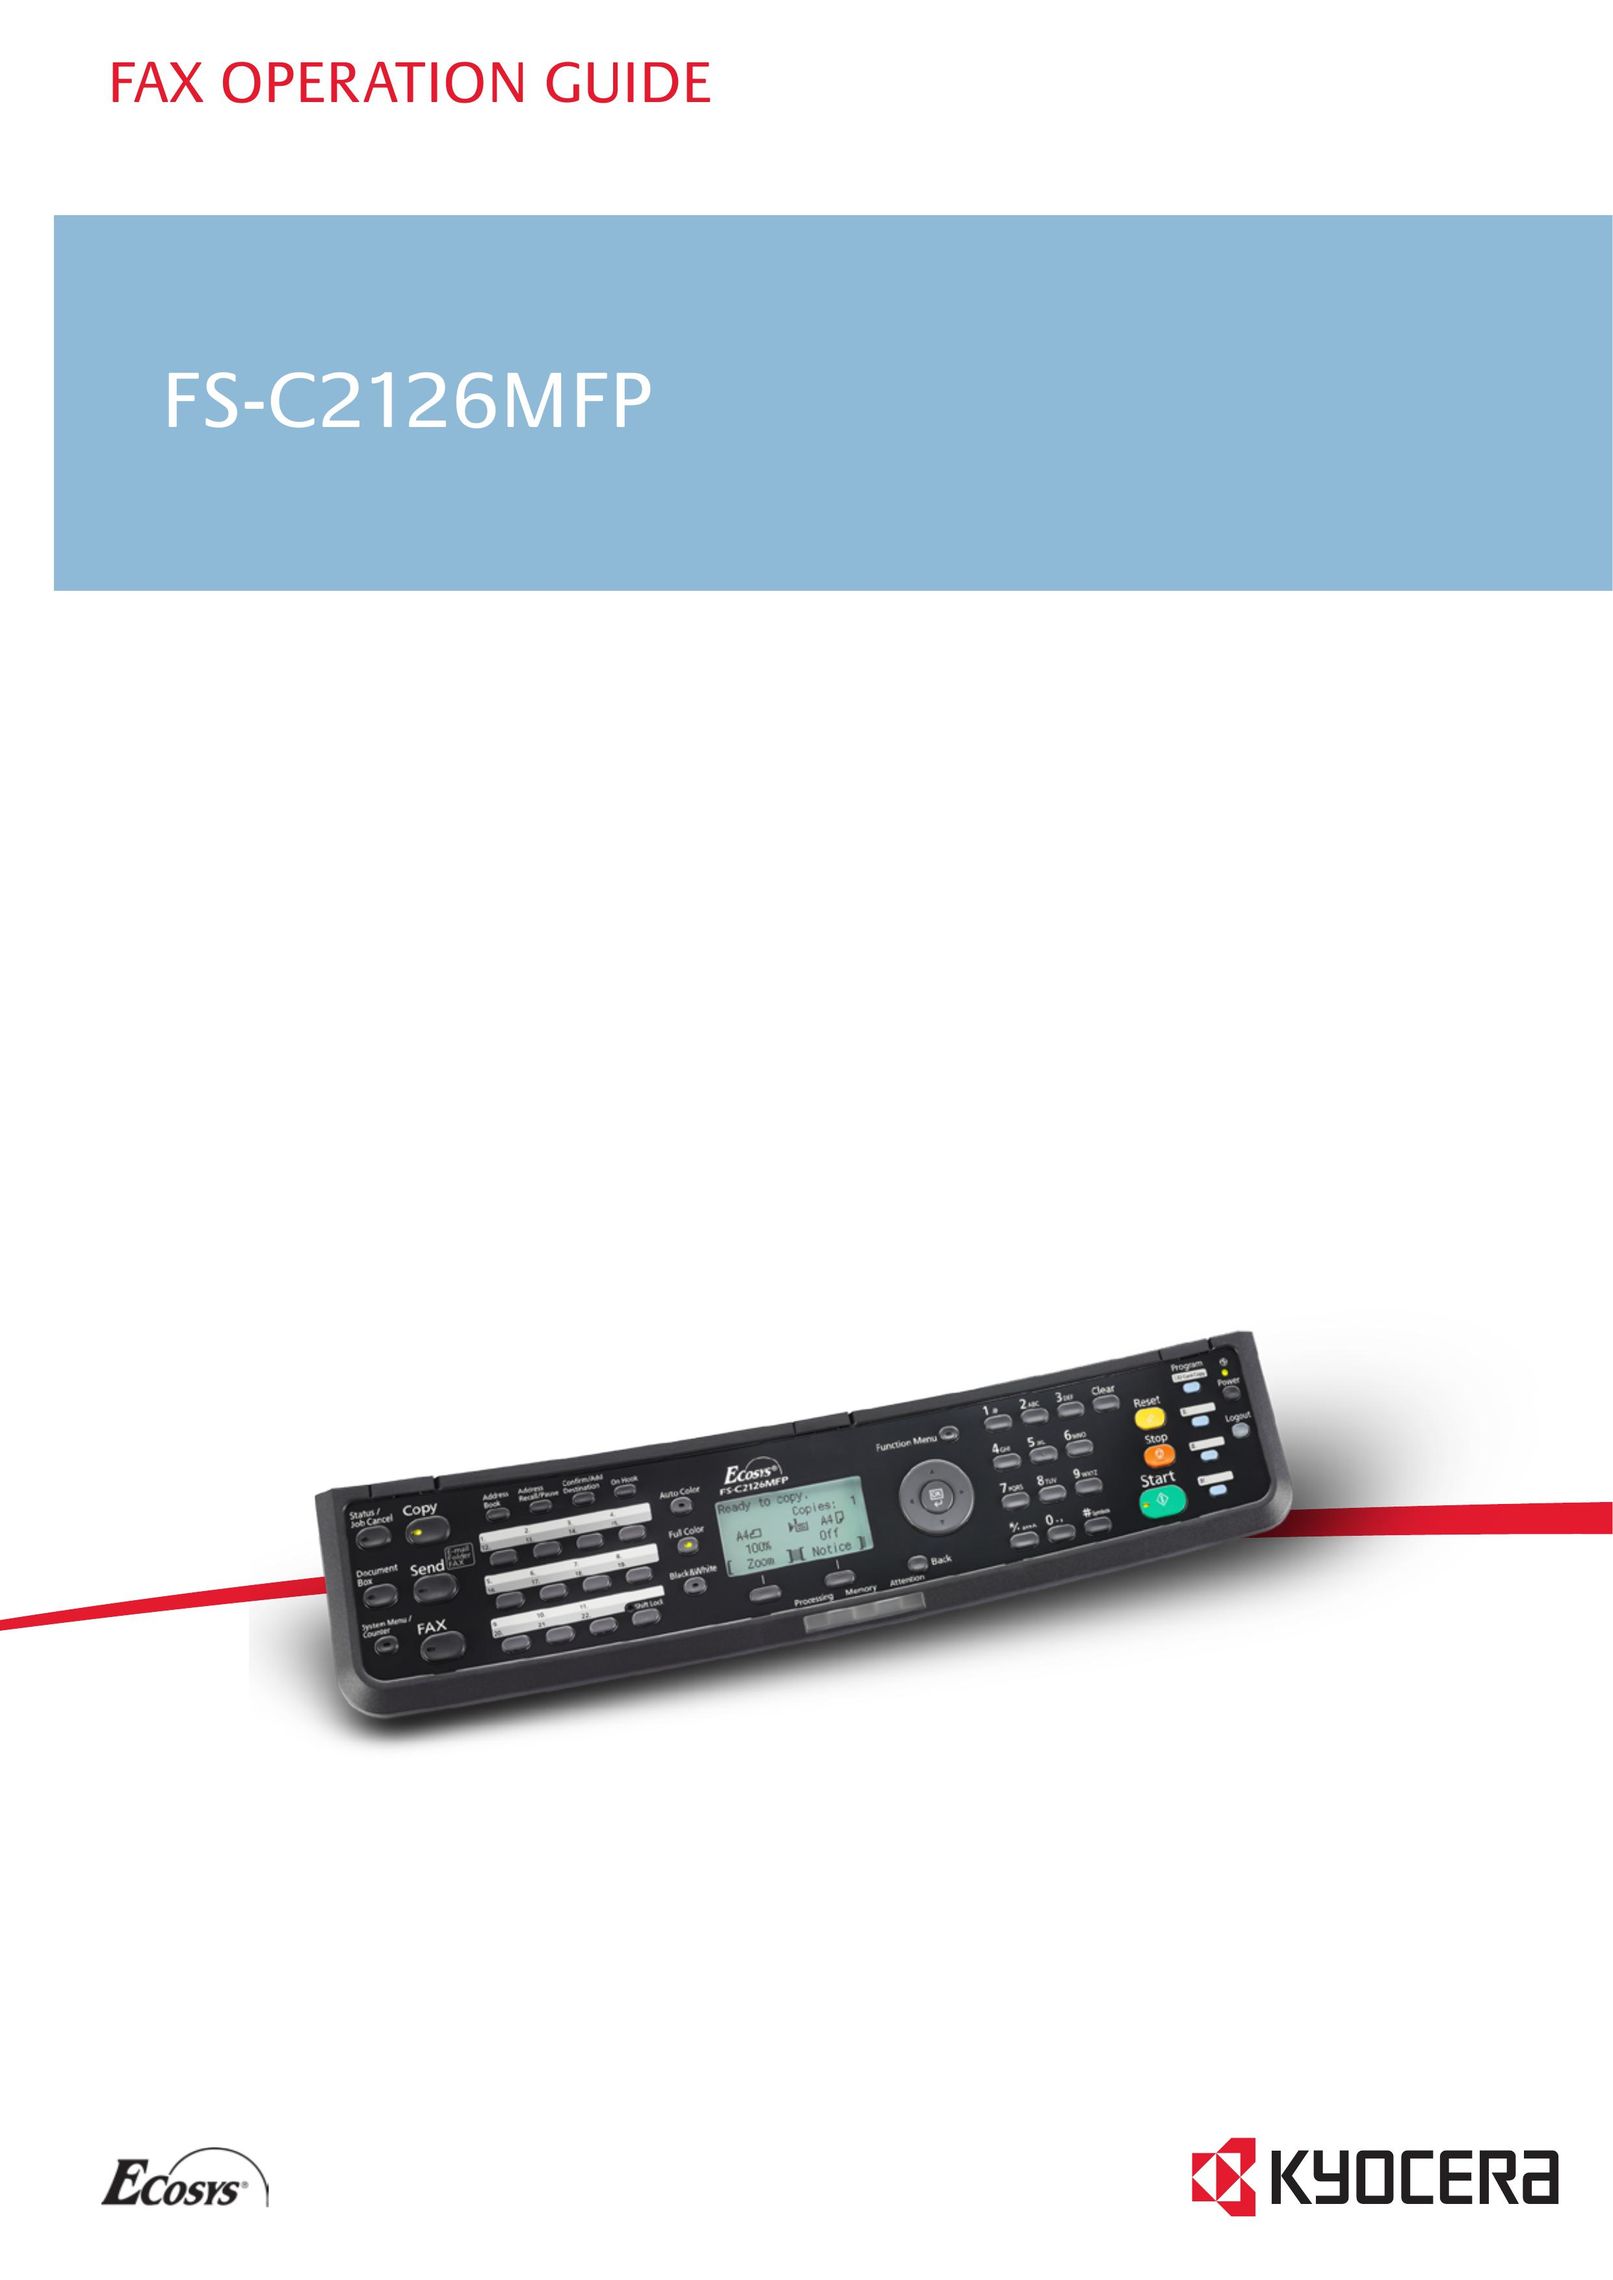 Kyocera FS-C2126MFP Fax Machine User Manual